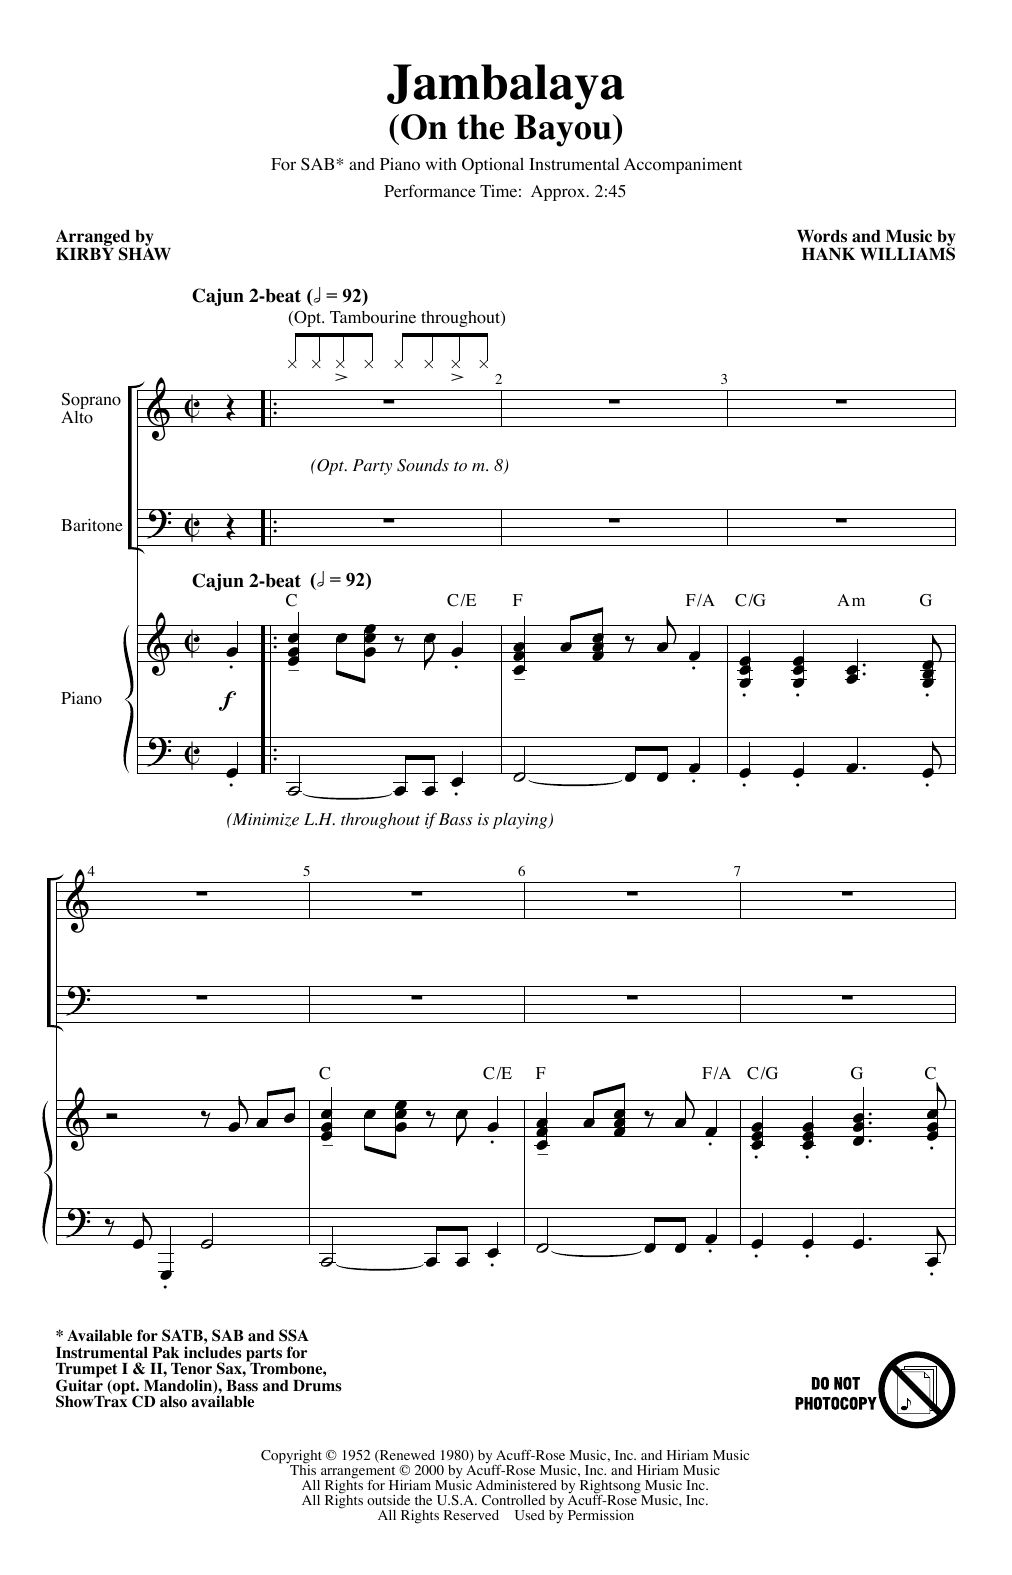 Hank Williams Jambalaya (On The Bayou) (arr. Kirby Shaw) Sheet Music Notes & Chords for SAB Choir - Download or Print PDF